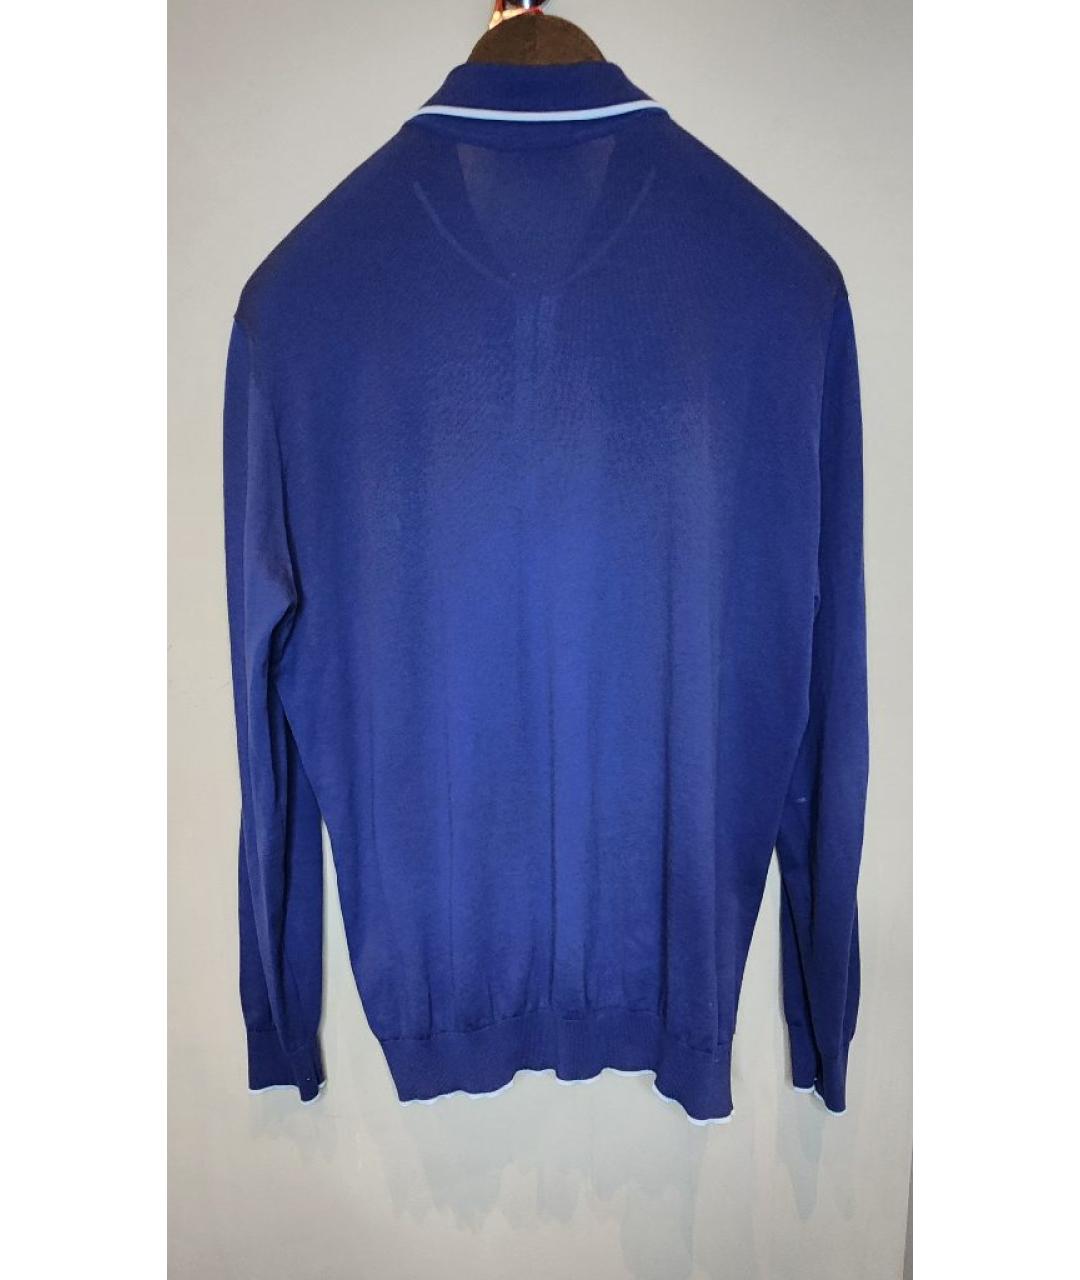 BERTOLO LUXURY MENSWEAR Темно-синий хлопковый джемпер / свитер, фото 2